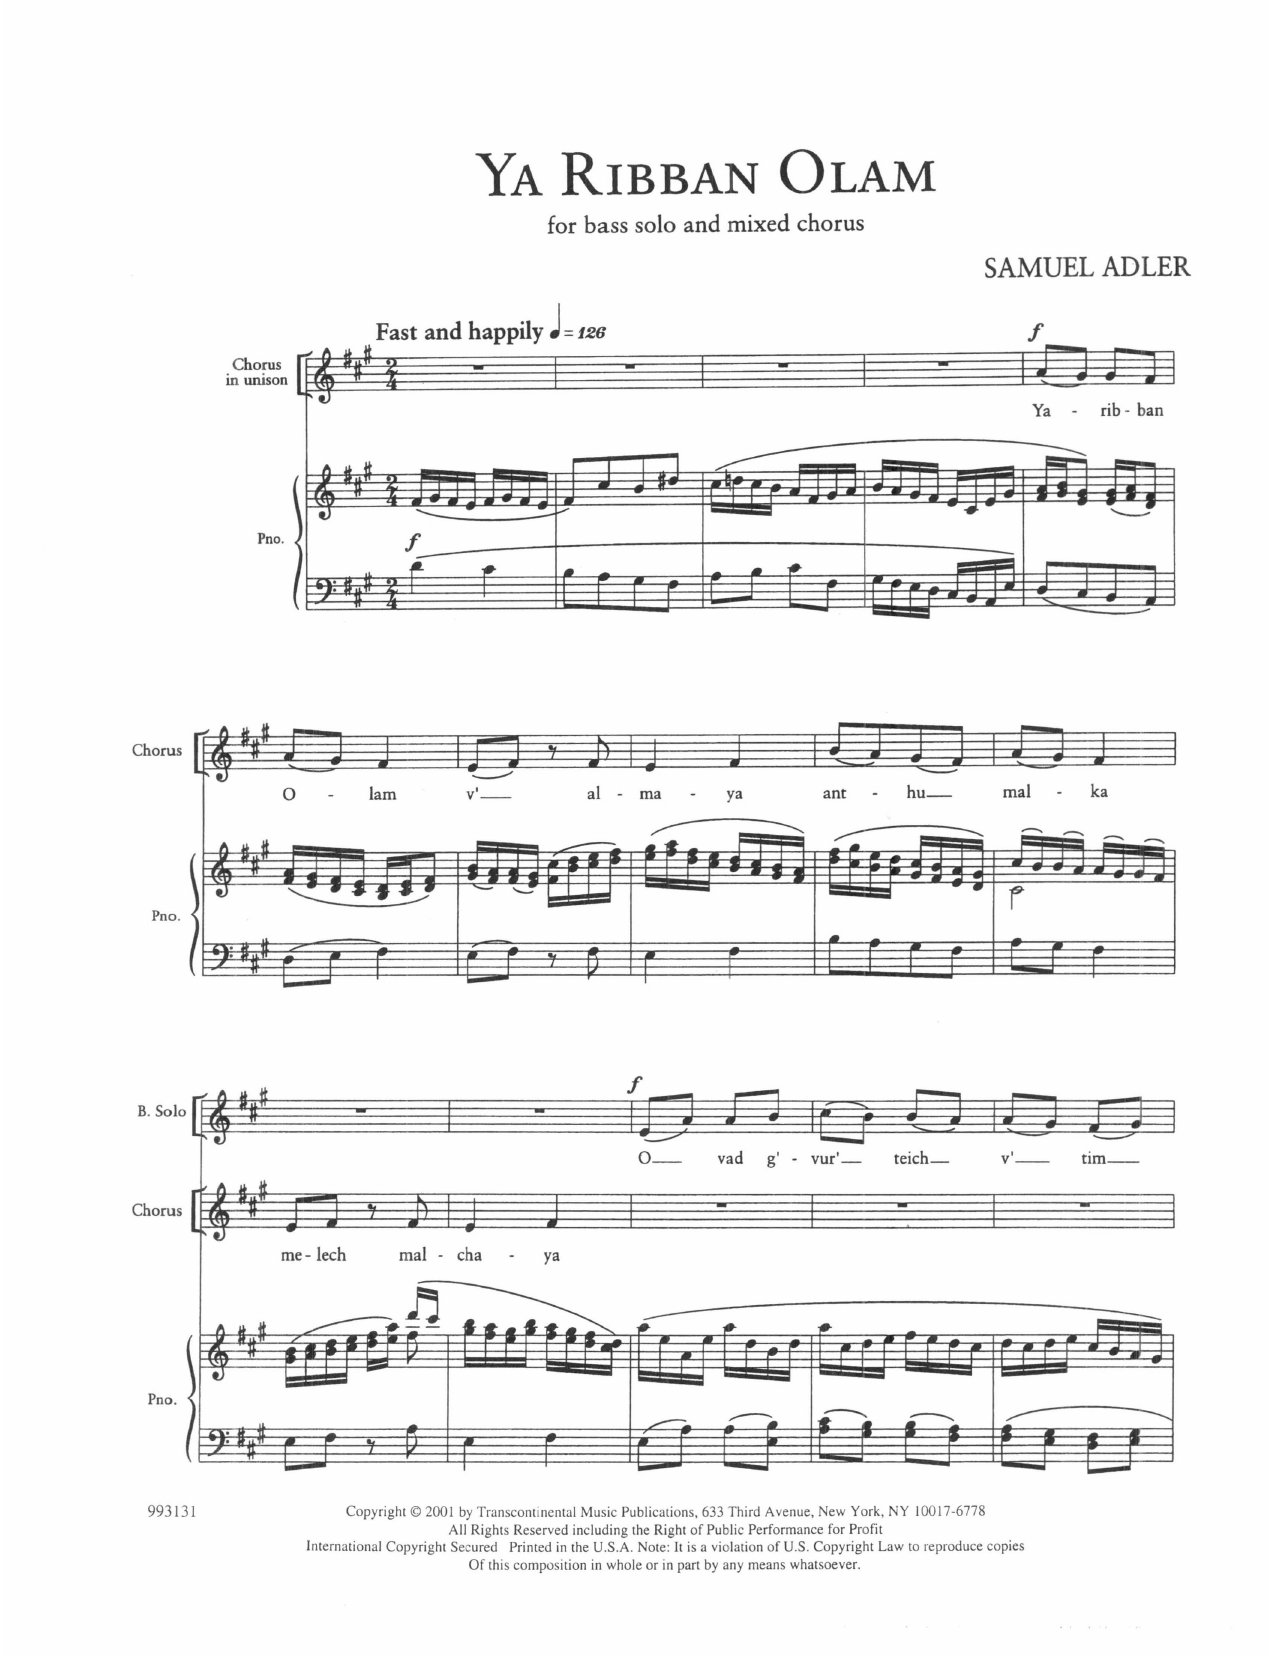 Download Samuel Adler Five Sephardic Choruses: Ya Ribban Olam Sheet Music